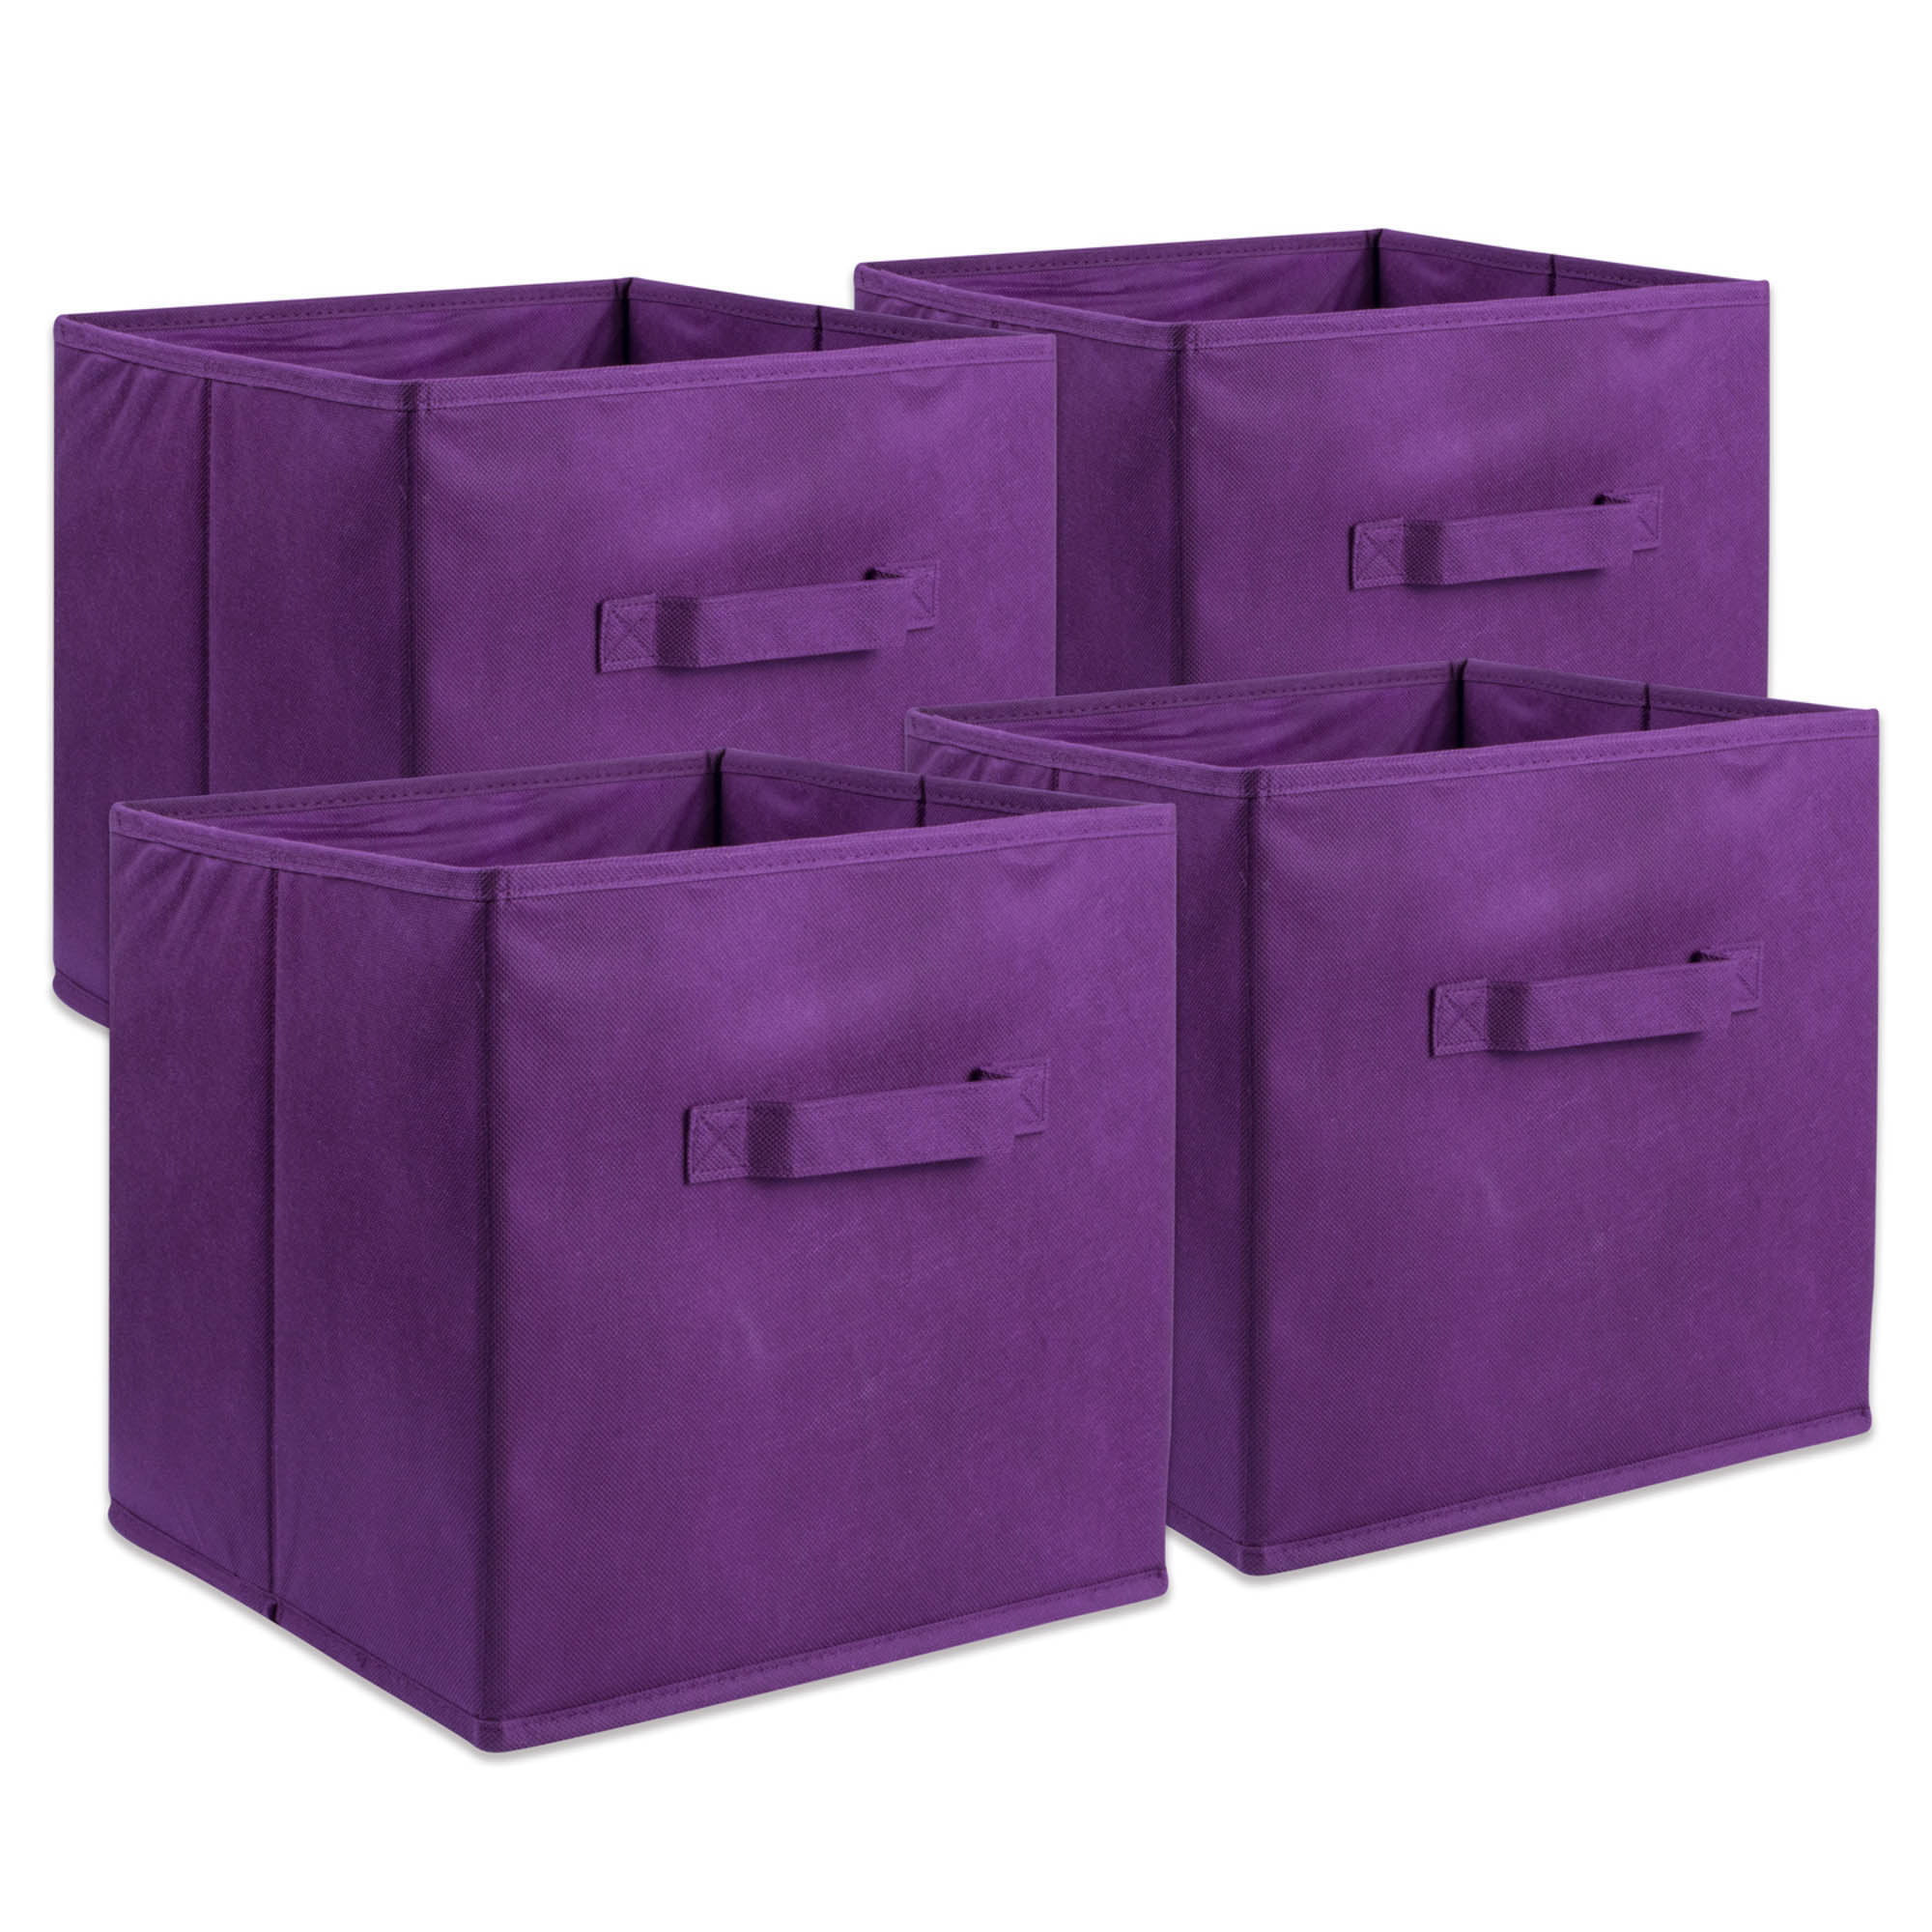 Set 6 Purple Cube Storage Bins Foldable Fabric Basket Drawer Organizer Container 